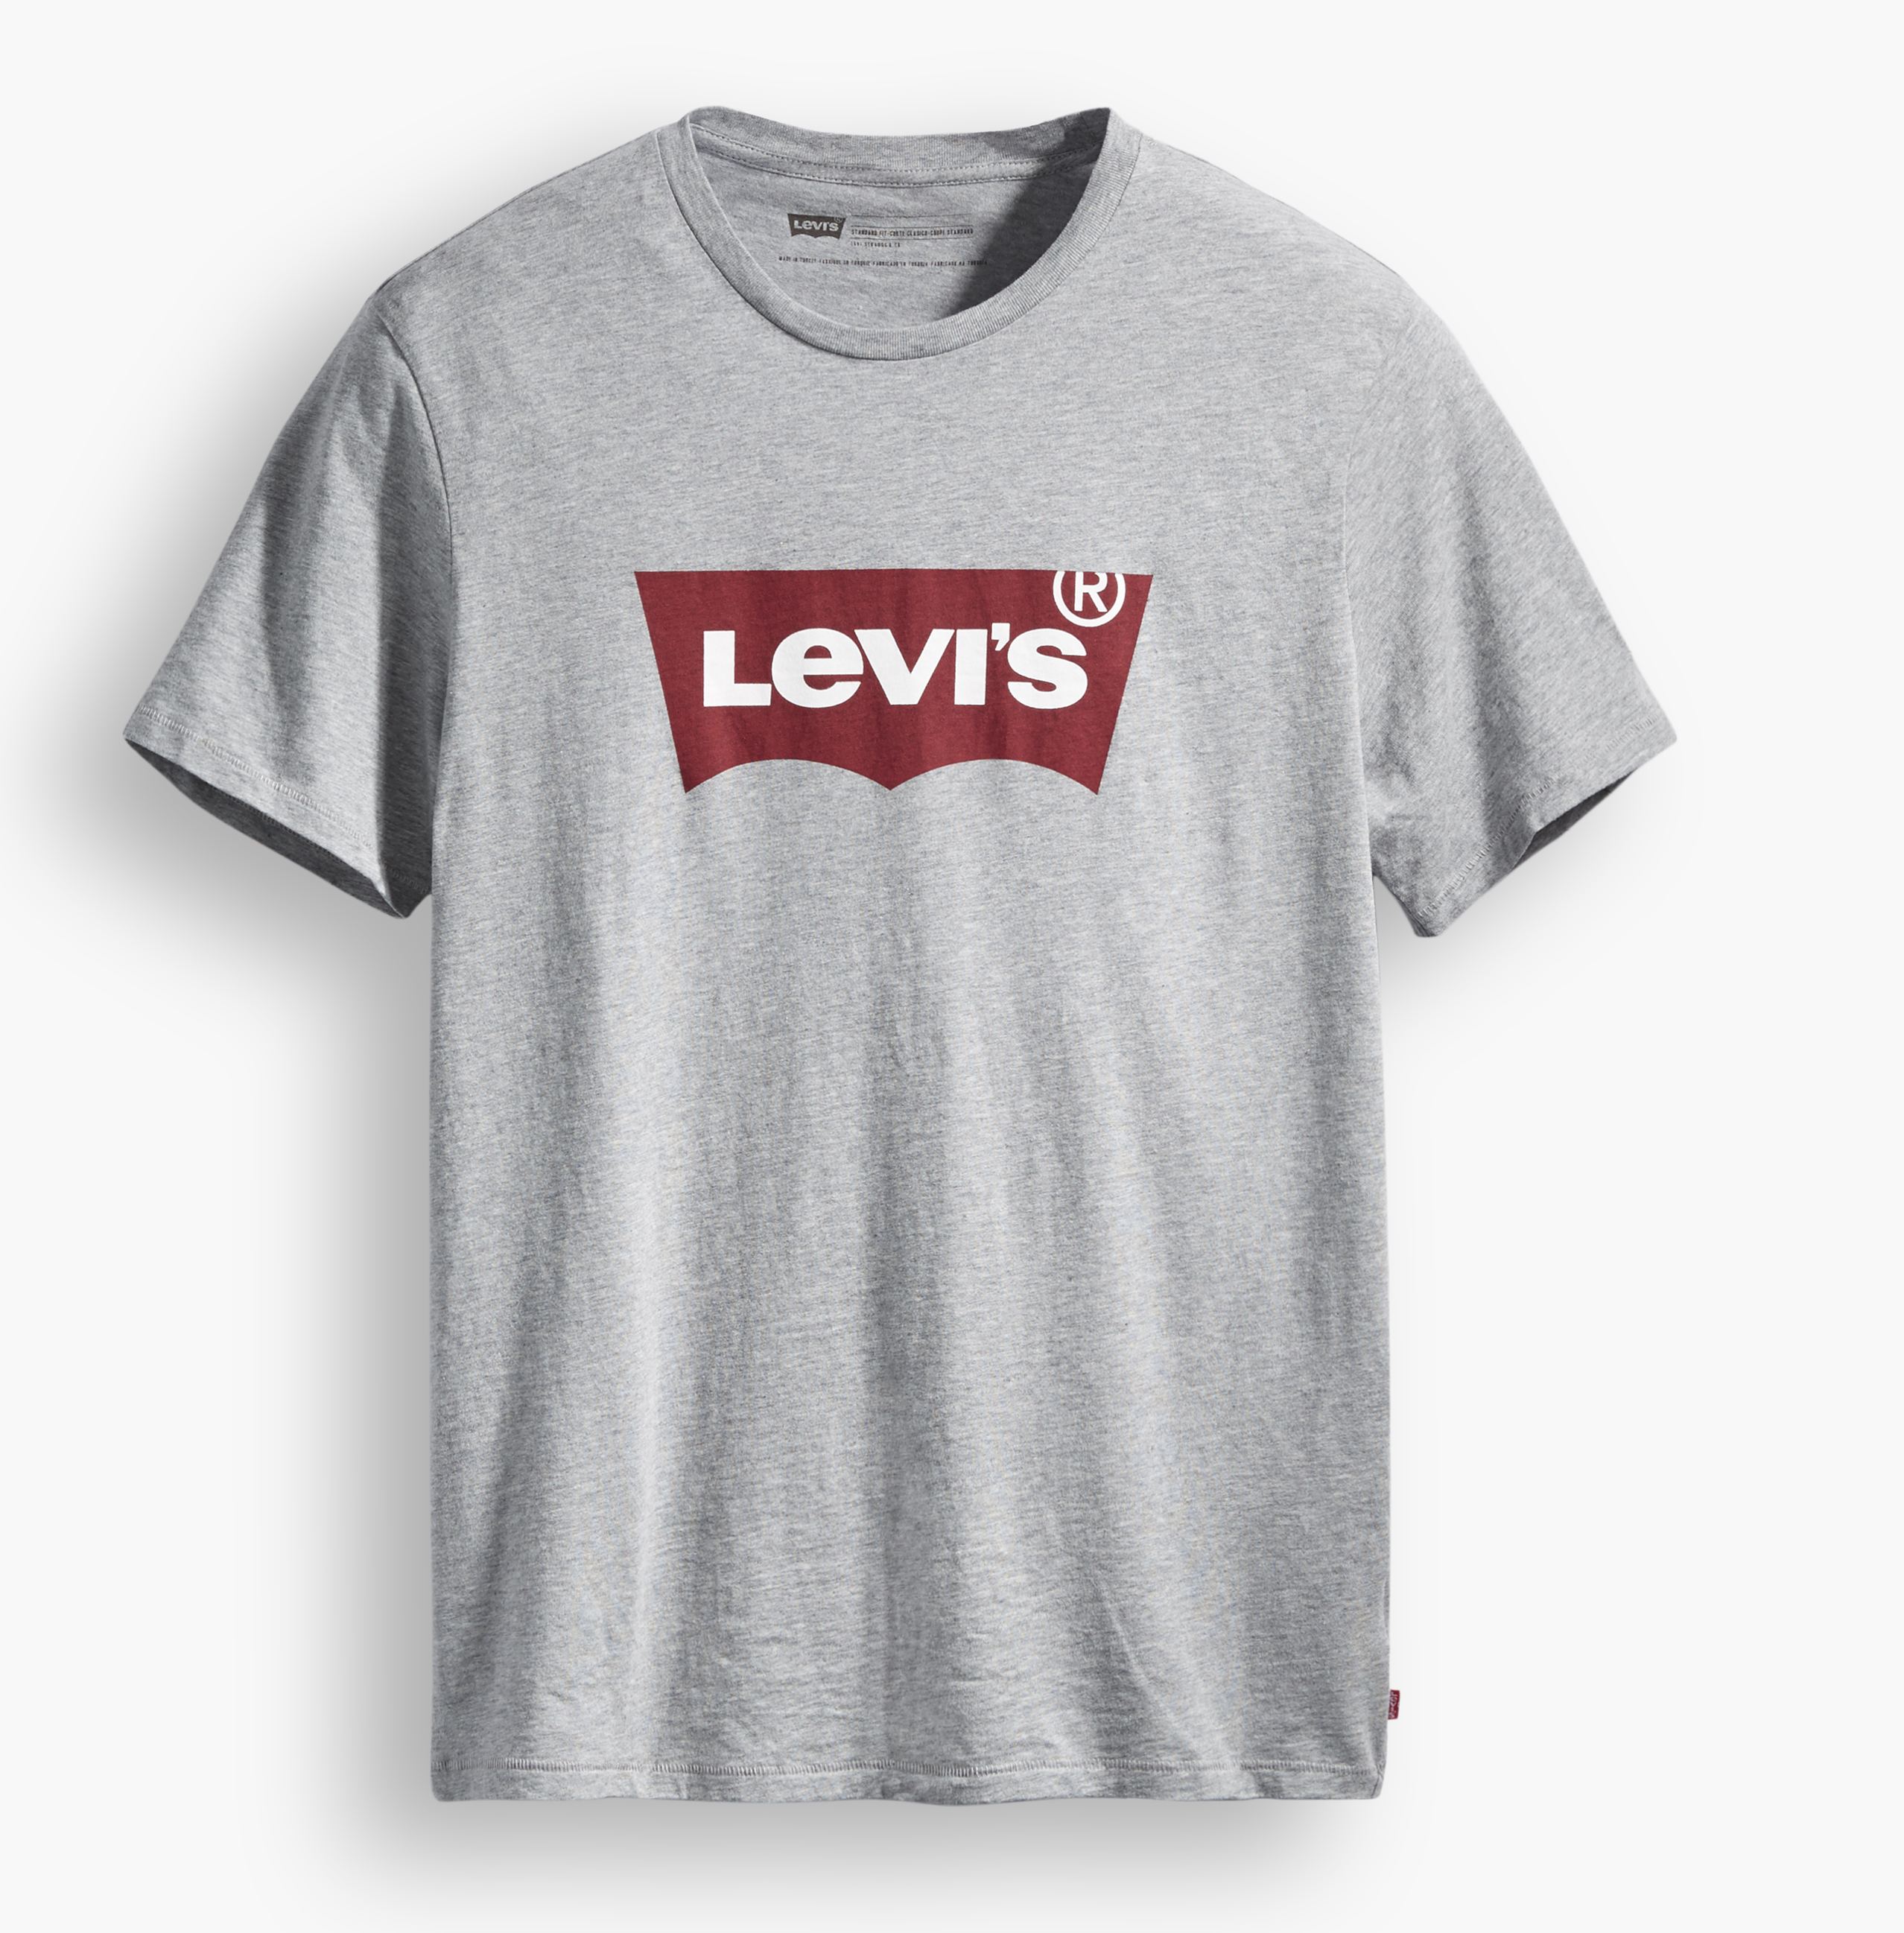 LEVIS Shirts Rundhals T-Shirt 17783-0138 grau W18-LVT1